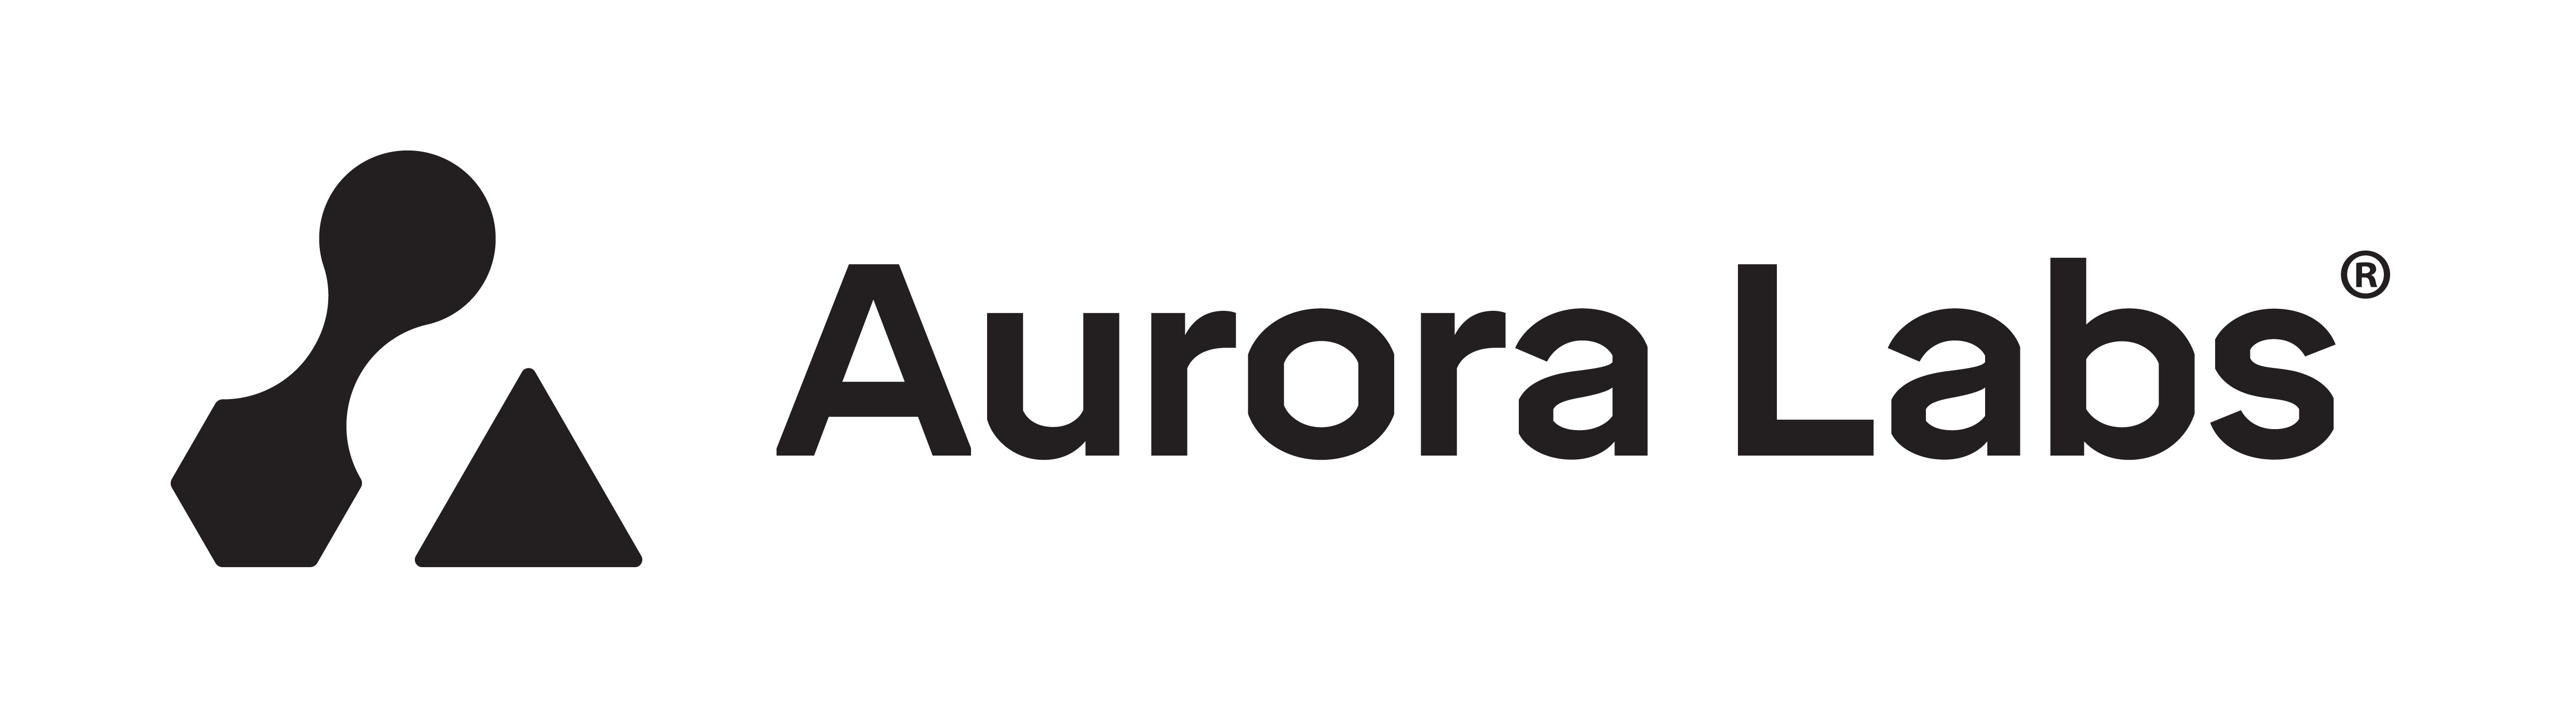 Aurora Labs Ltd logo